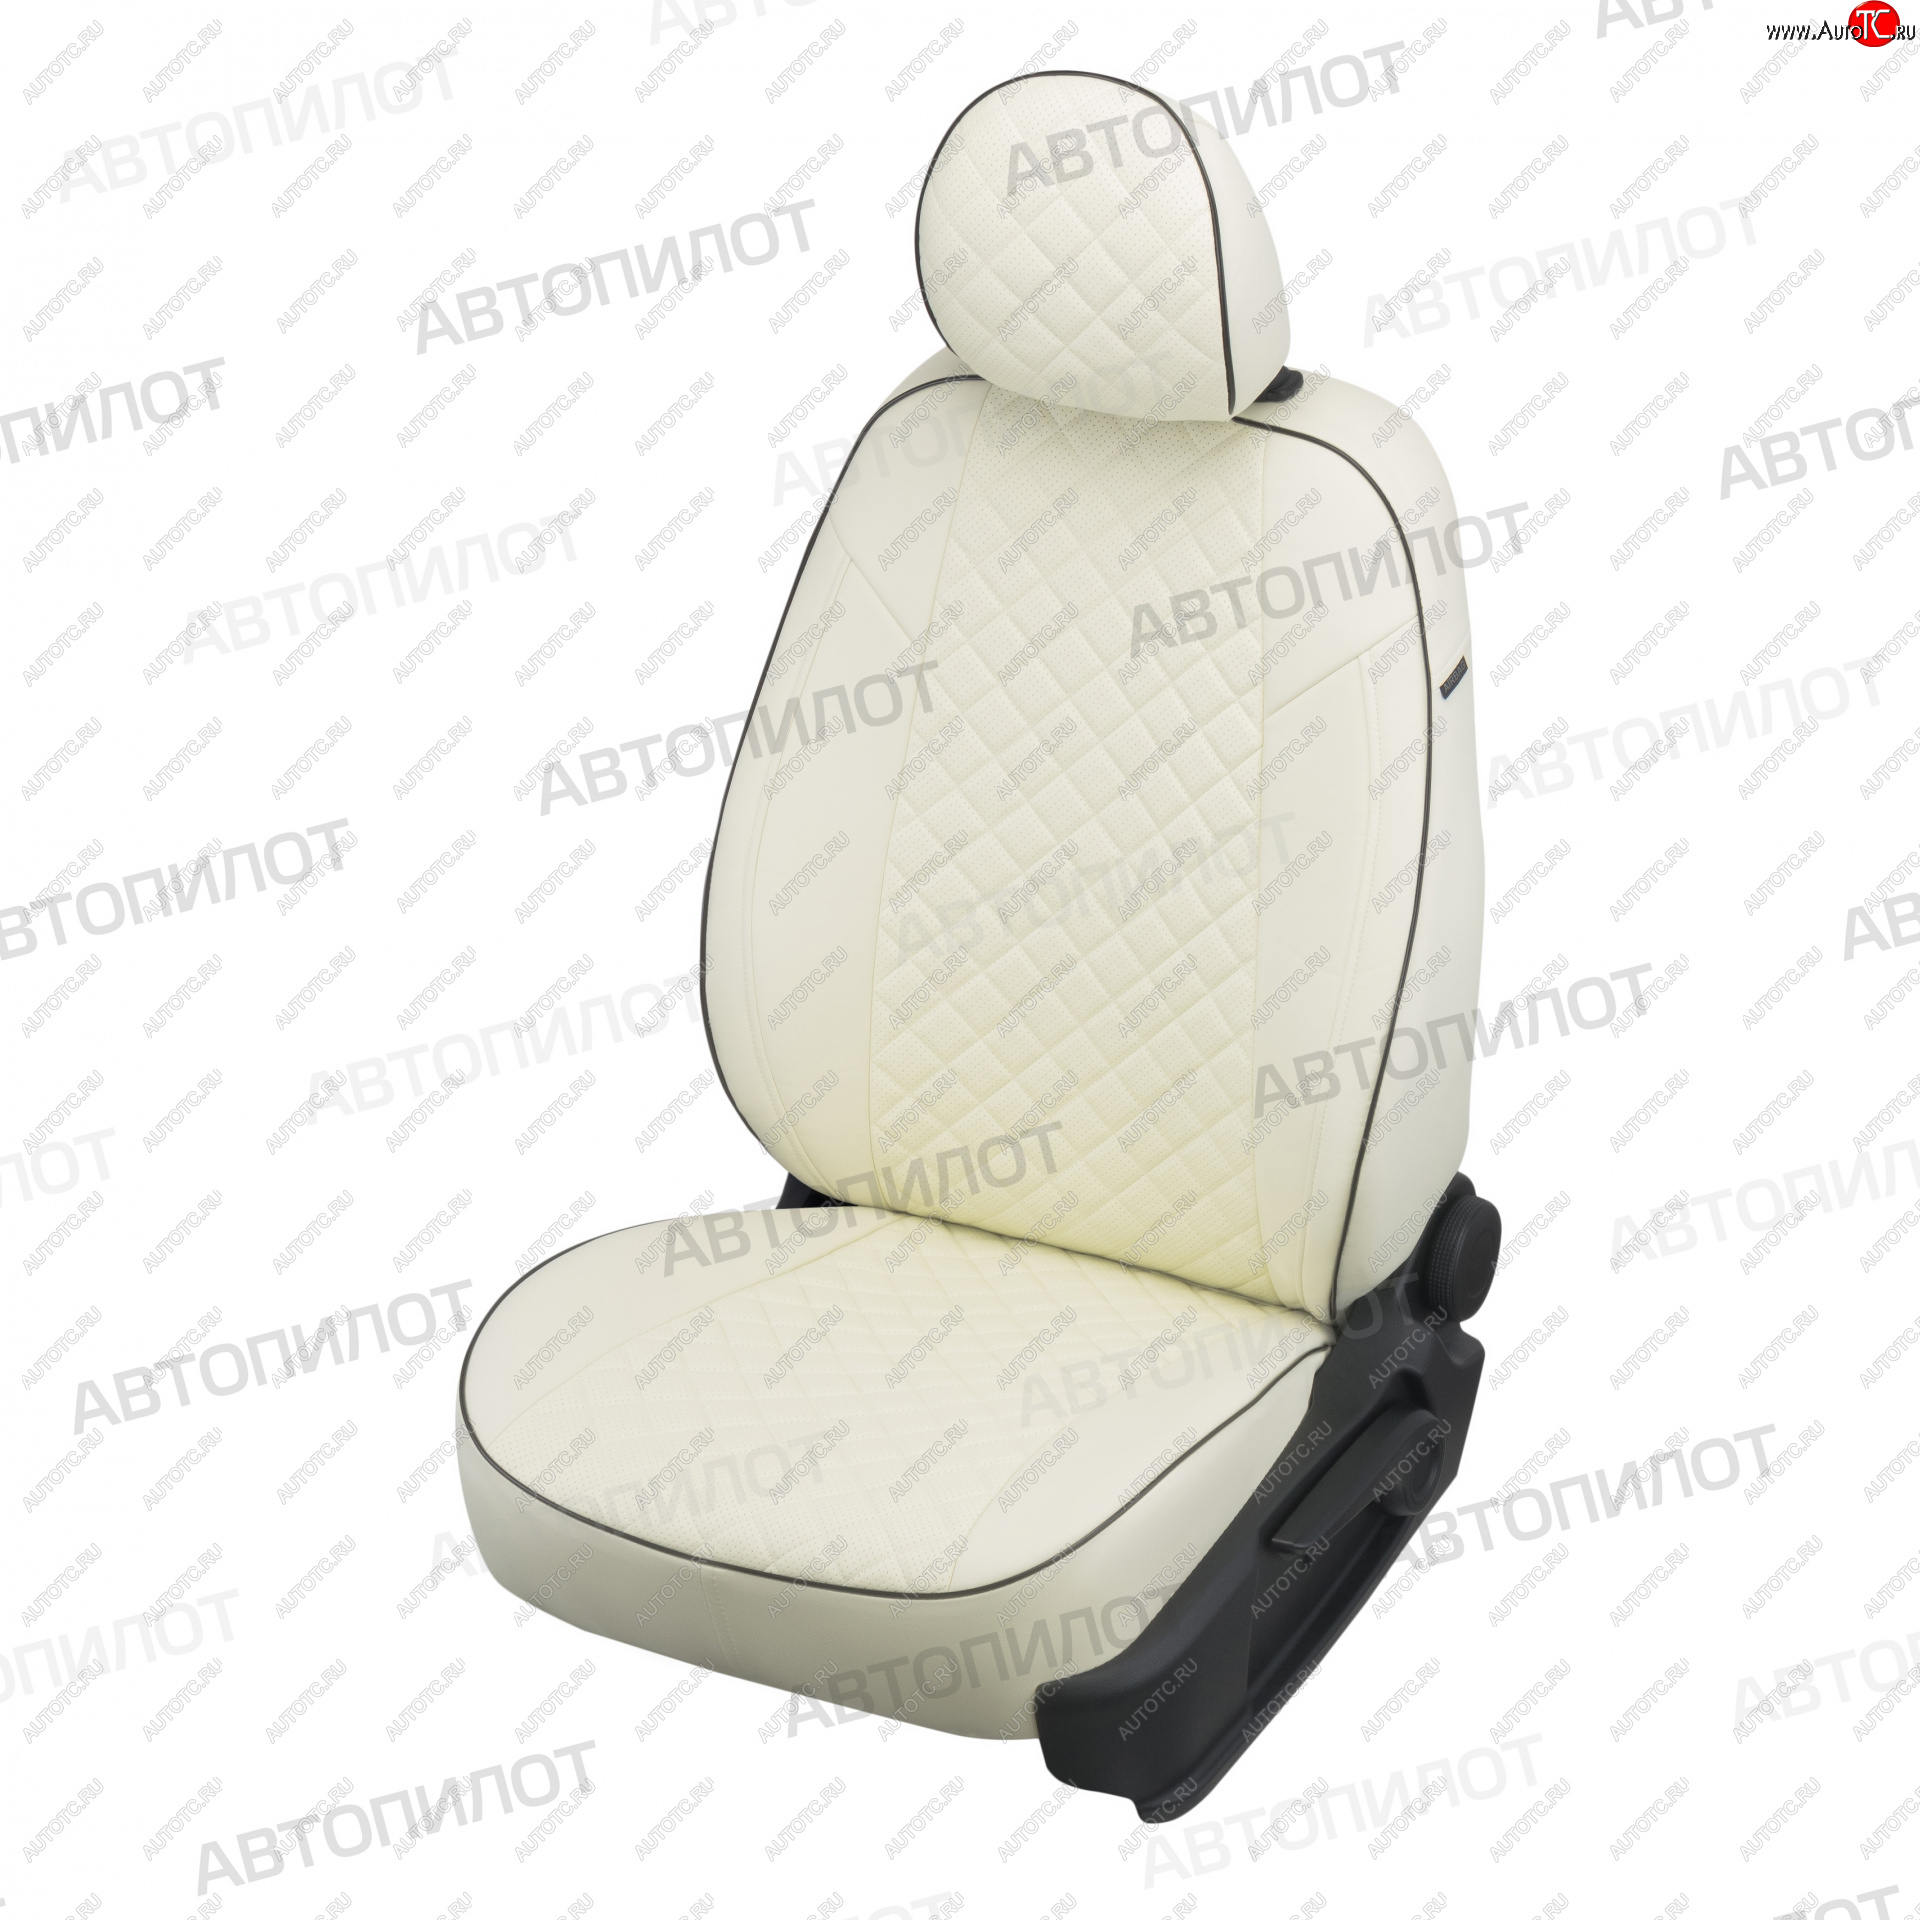 7 599 р. Чехлы сидений (экокожа, Classic) Автопилот Ромб  KIA Cerato  3 YD (2013-2019) (белый)